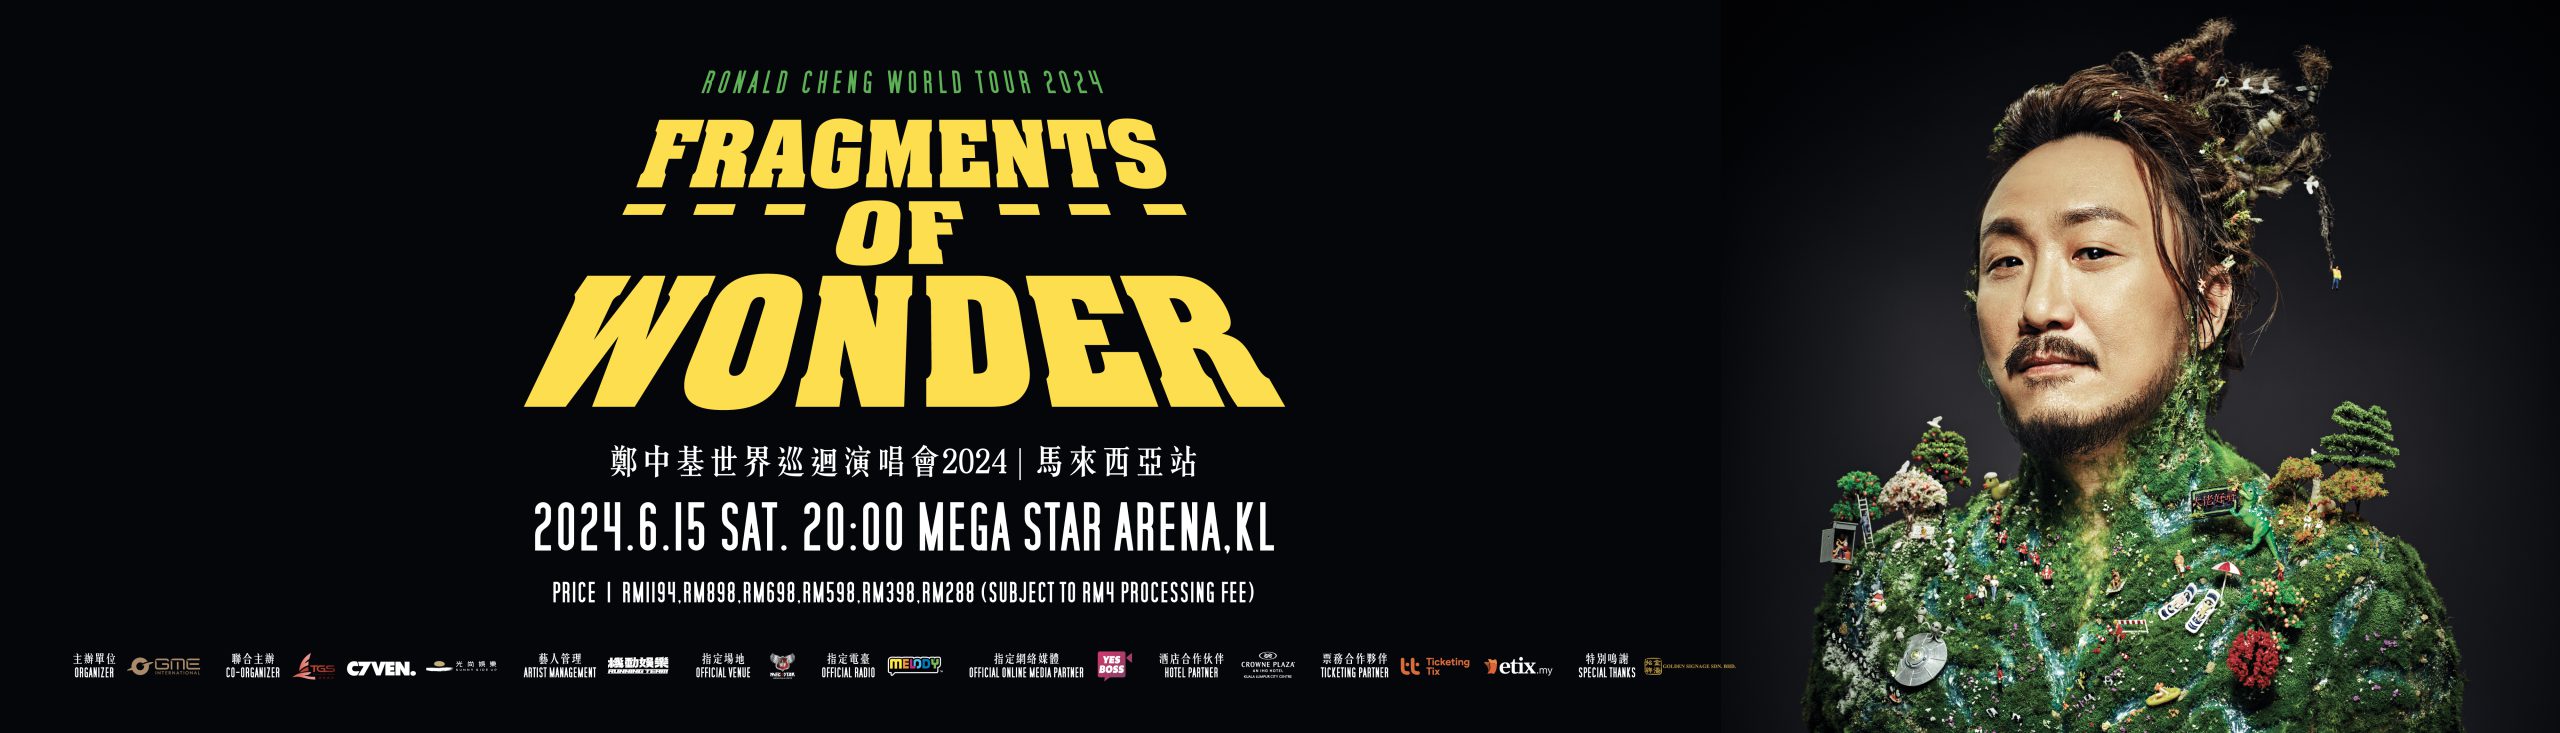 Ronald Cheng World Tour 2024 Fragments of Wonder